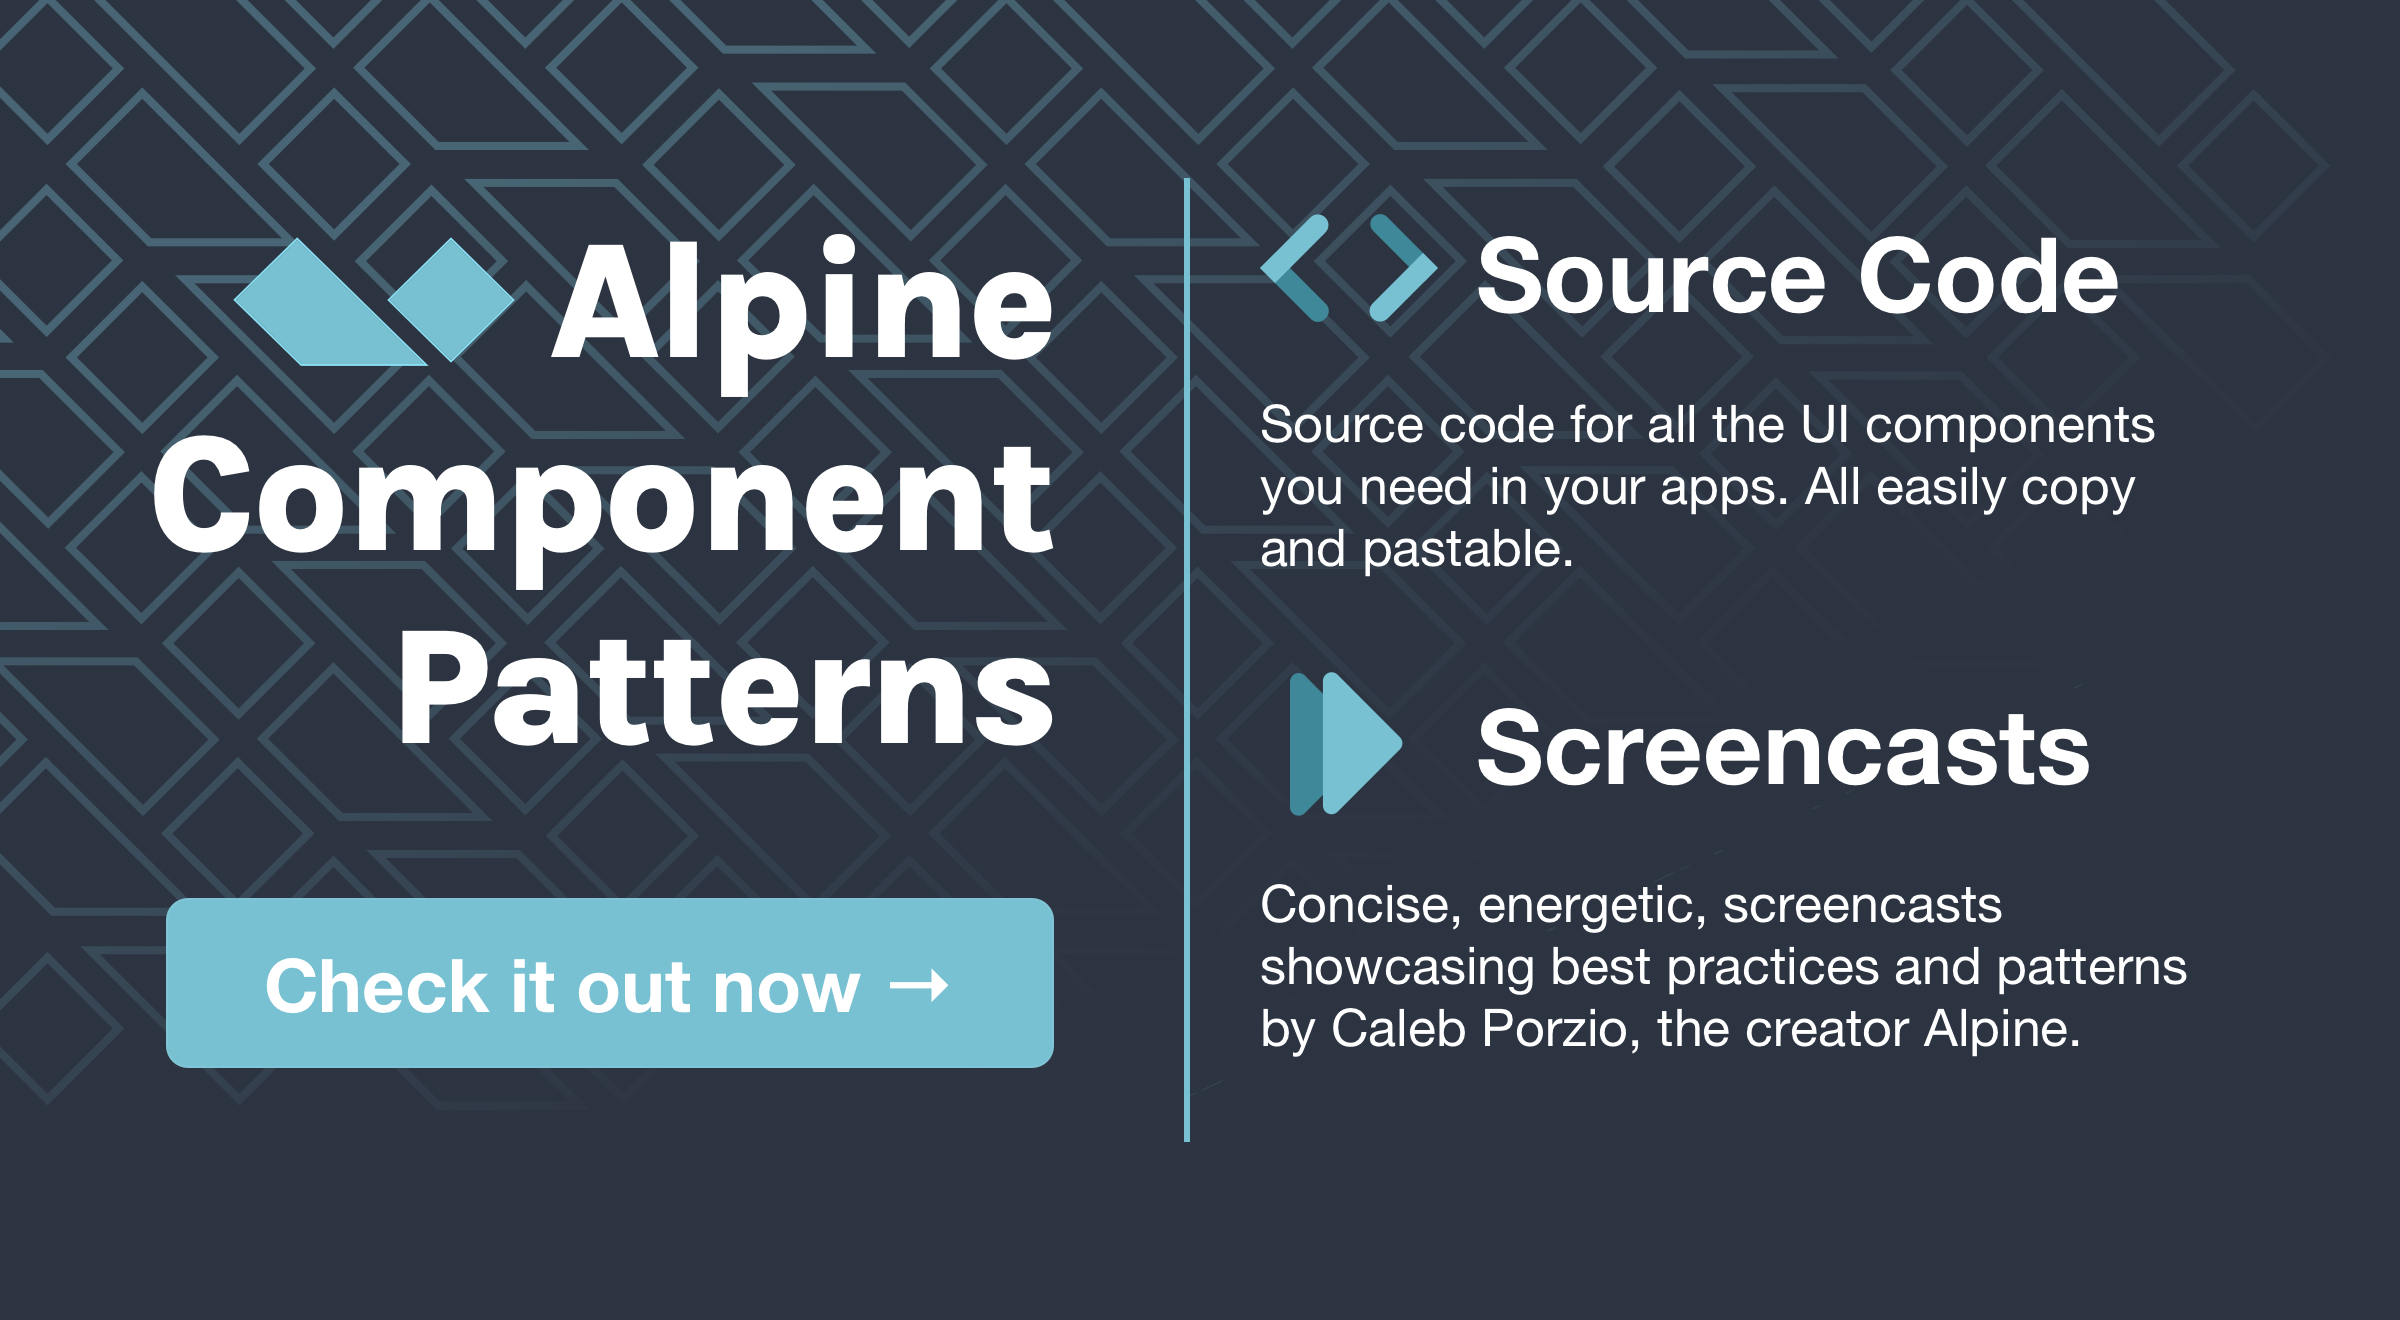 Alpine Compoenent Patterns